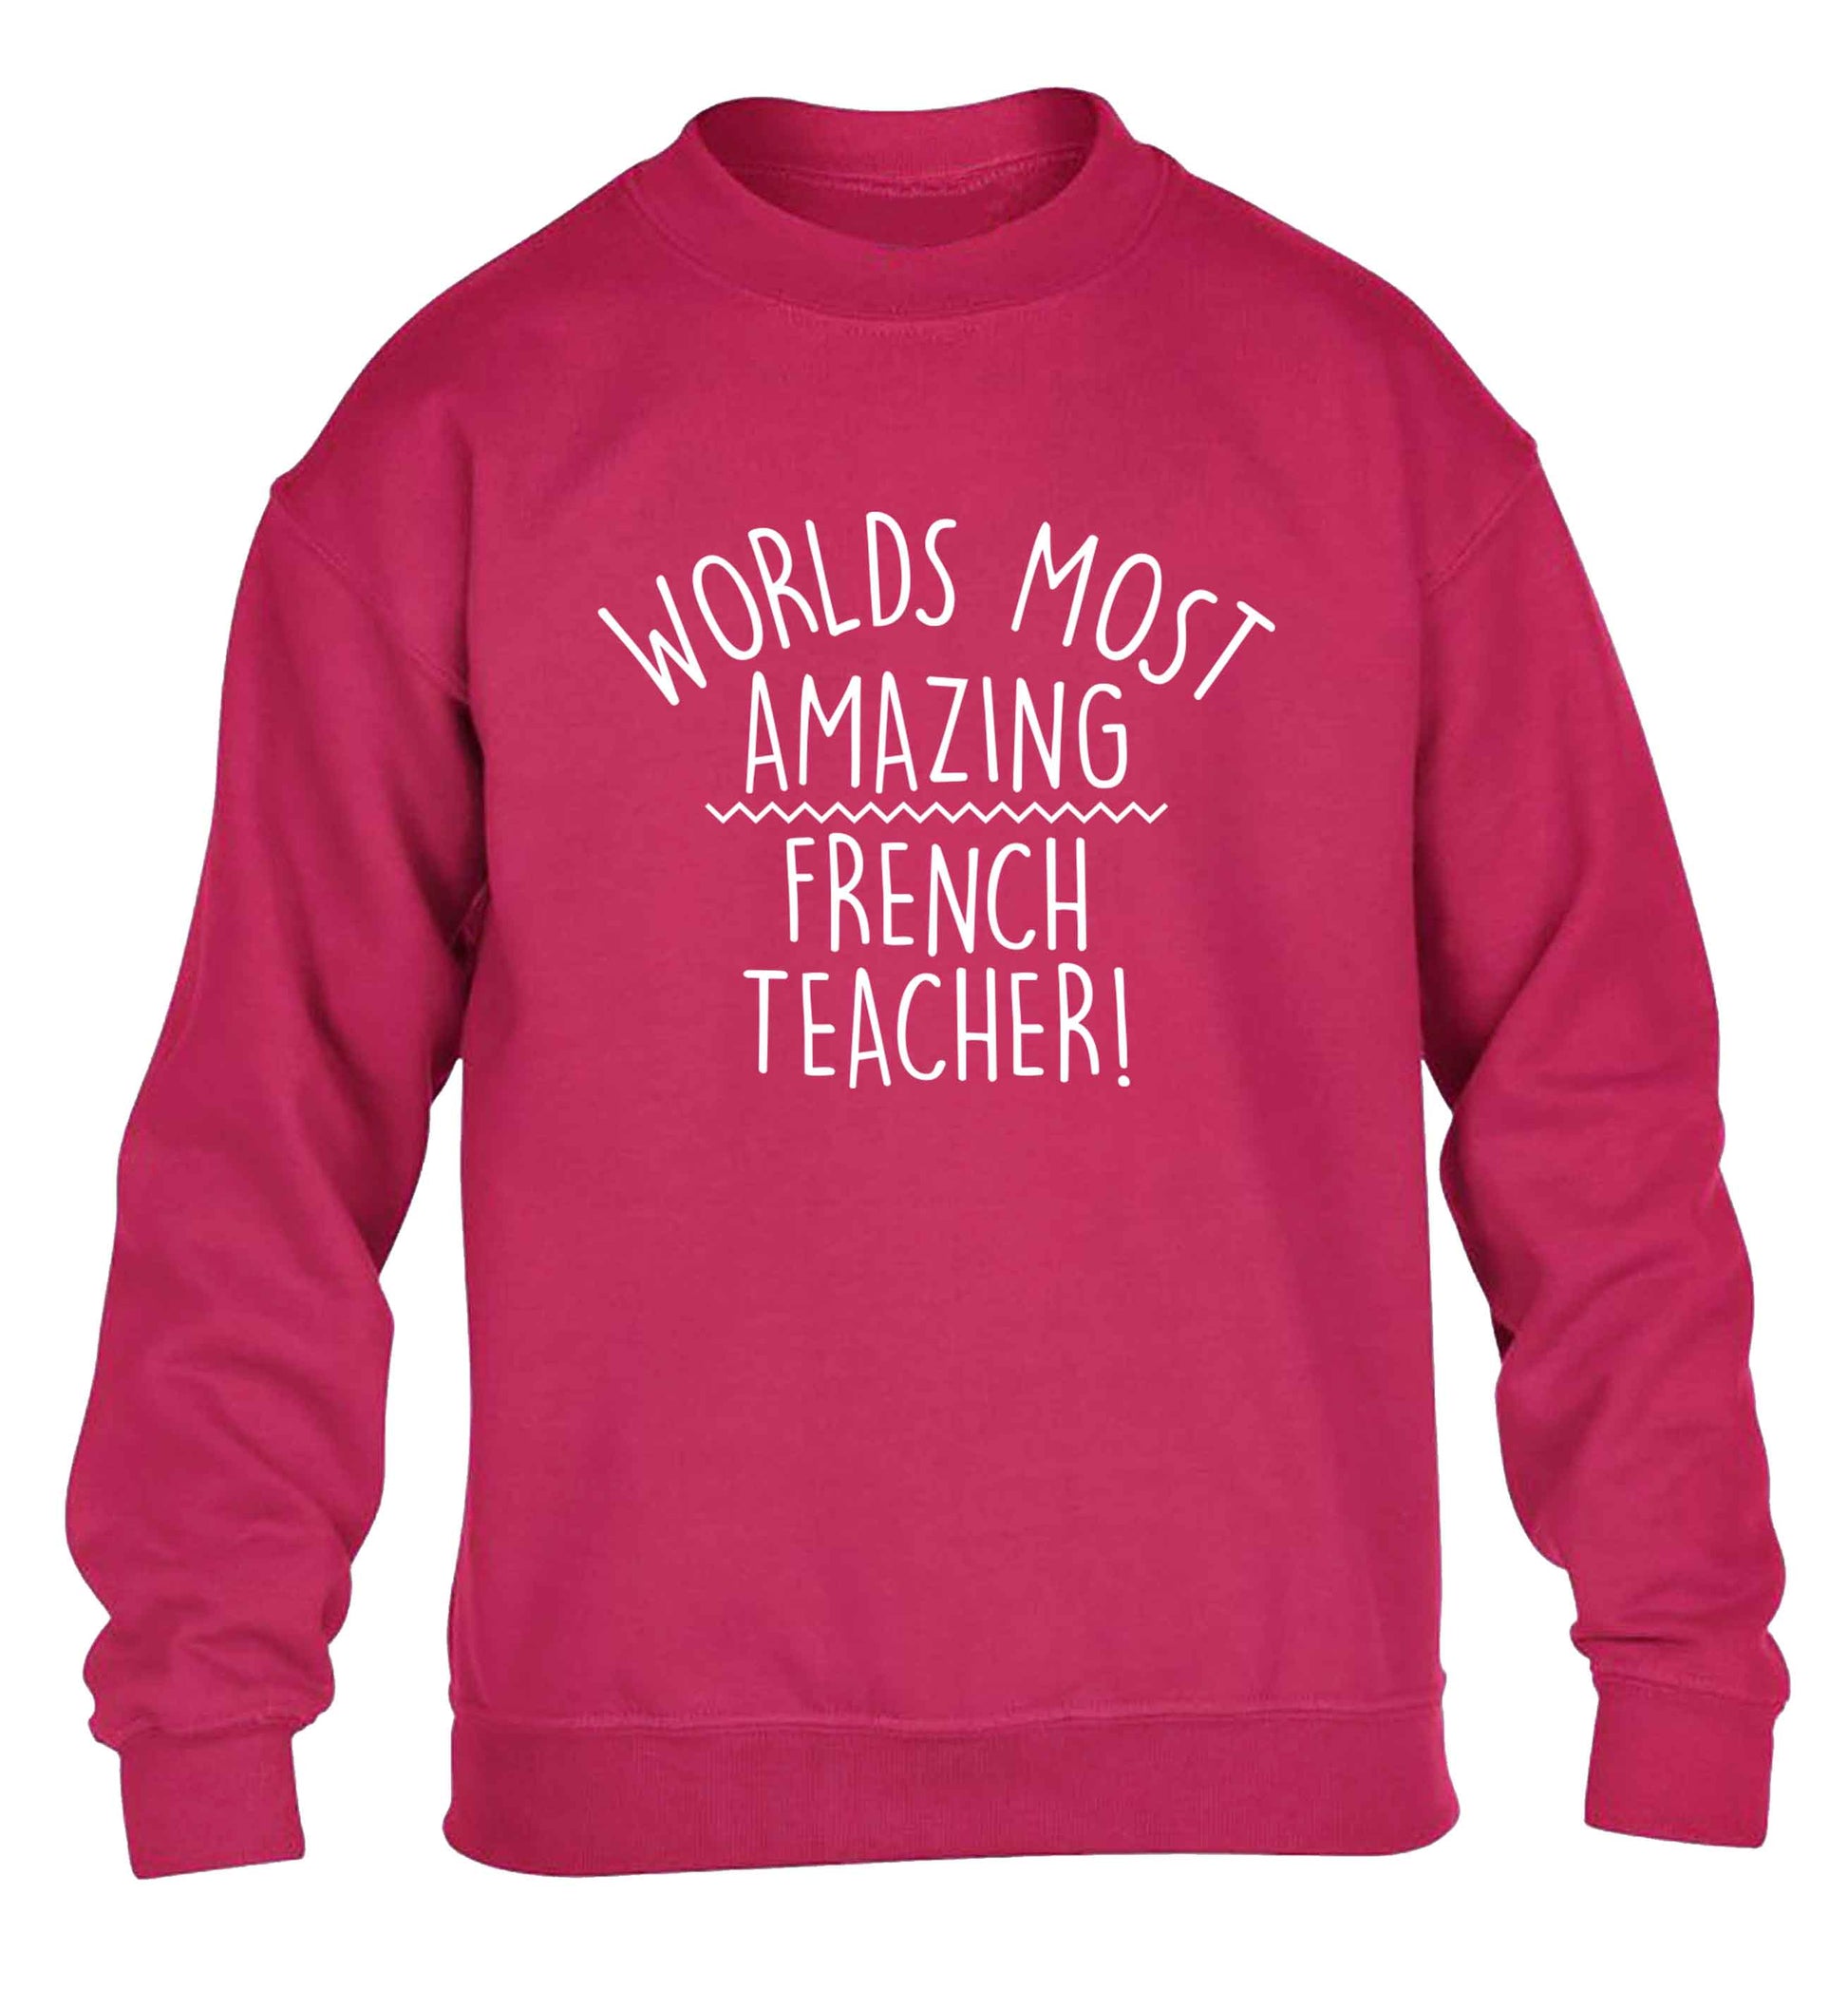 Worlds most amazing French teacher children's pink sweater 12-13 Years